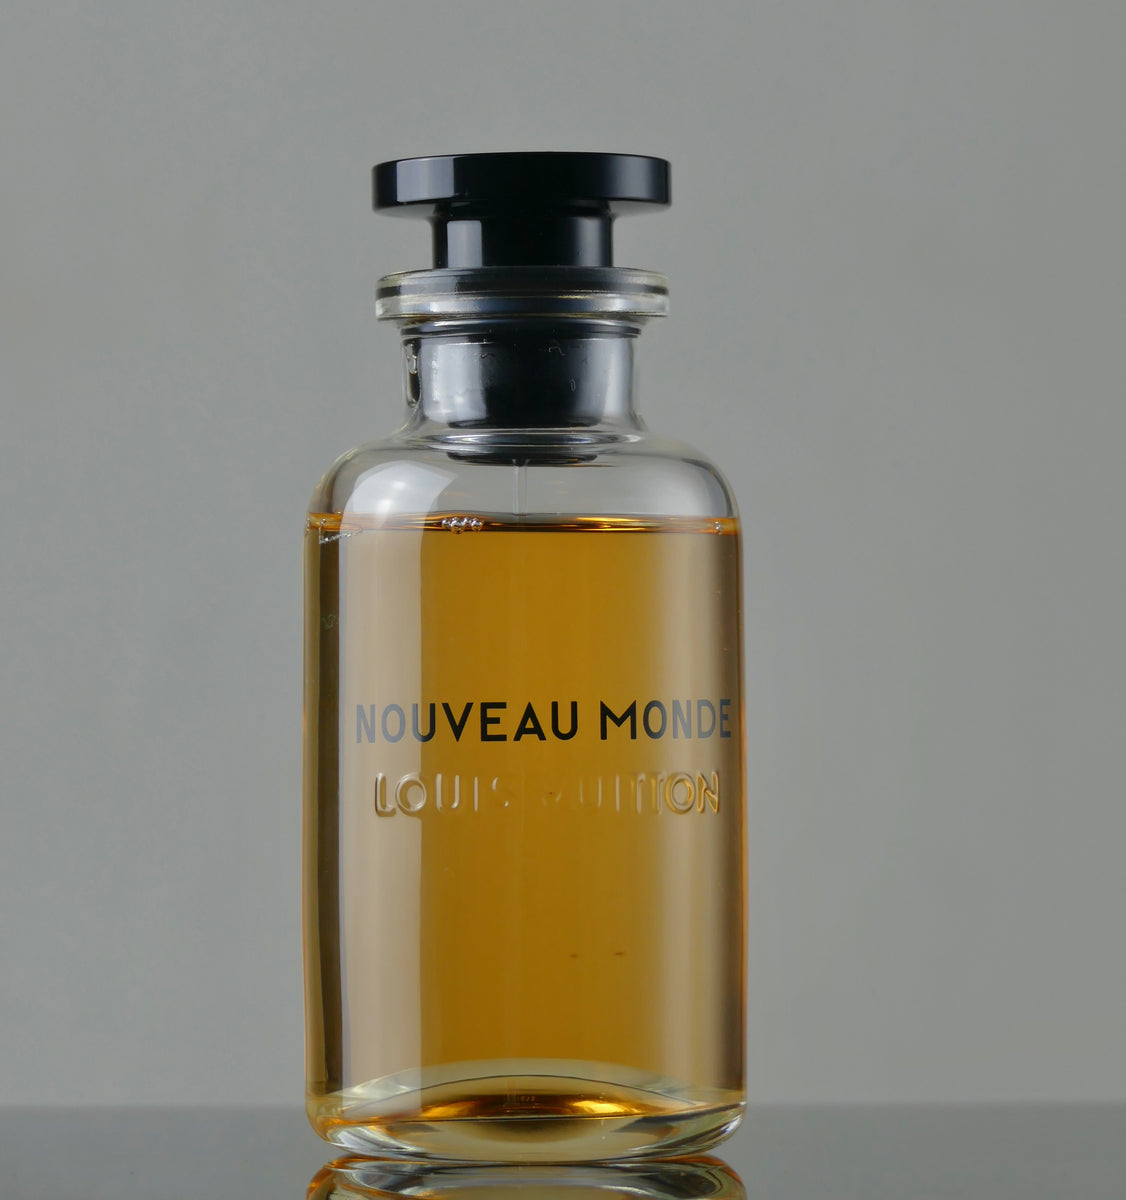 Nouveau Monde. Inspired by Nouveau Monde by Louis Vuitton. #perfume # perfumes #perfumecollection #perfumelovers #perfumesimportados  #perfumemurah, By museefragrances